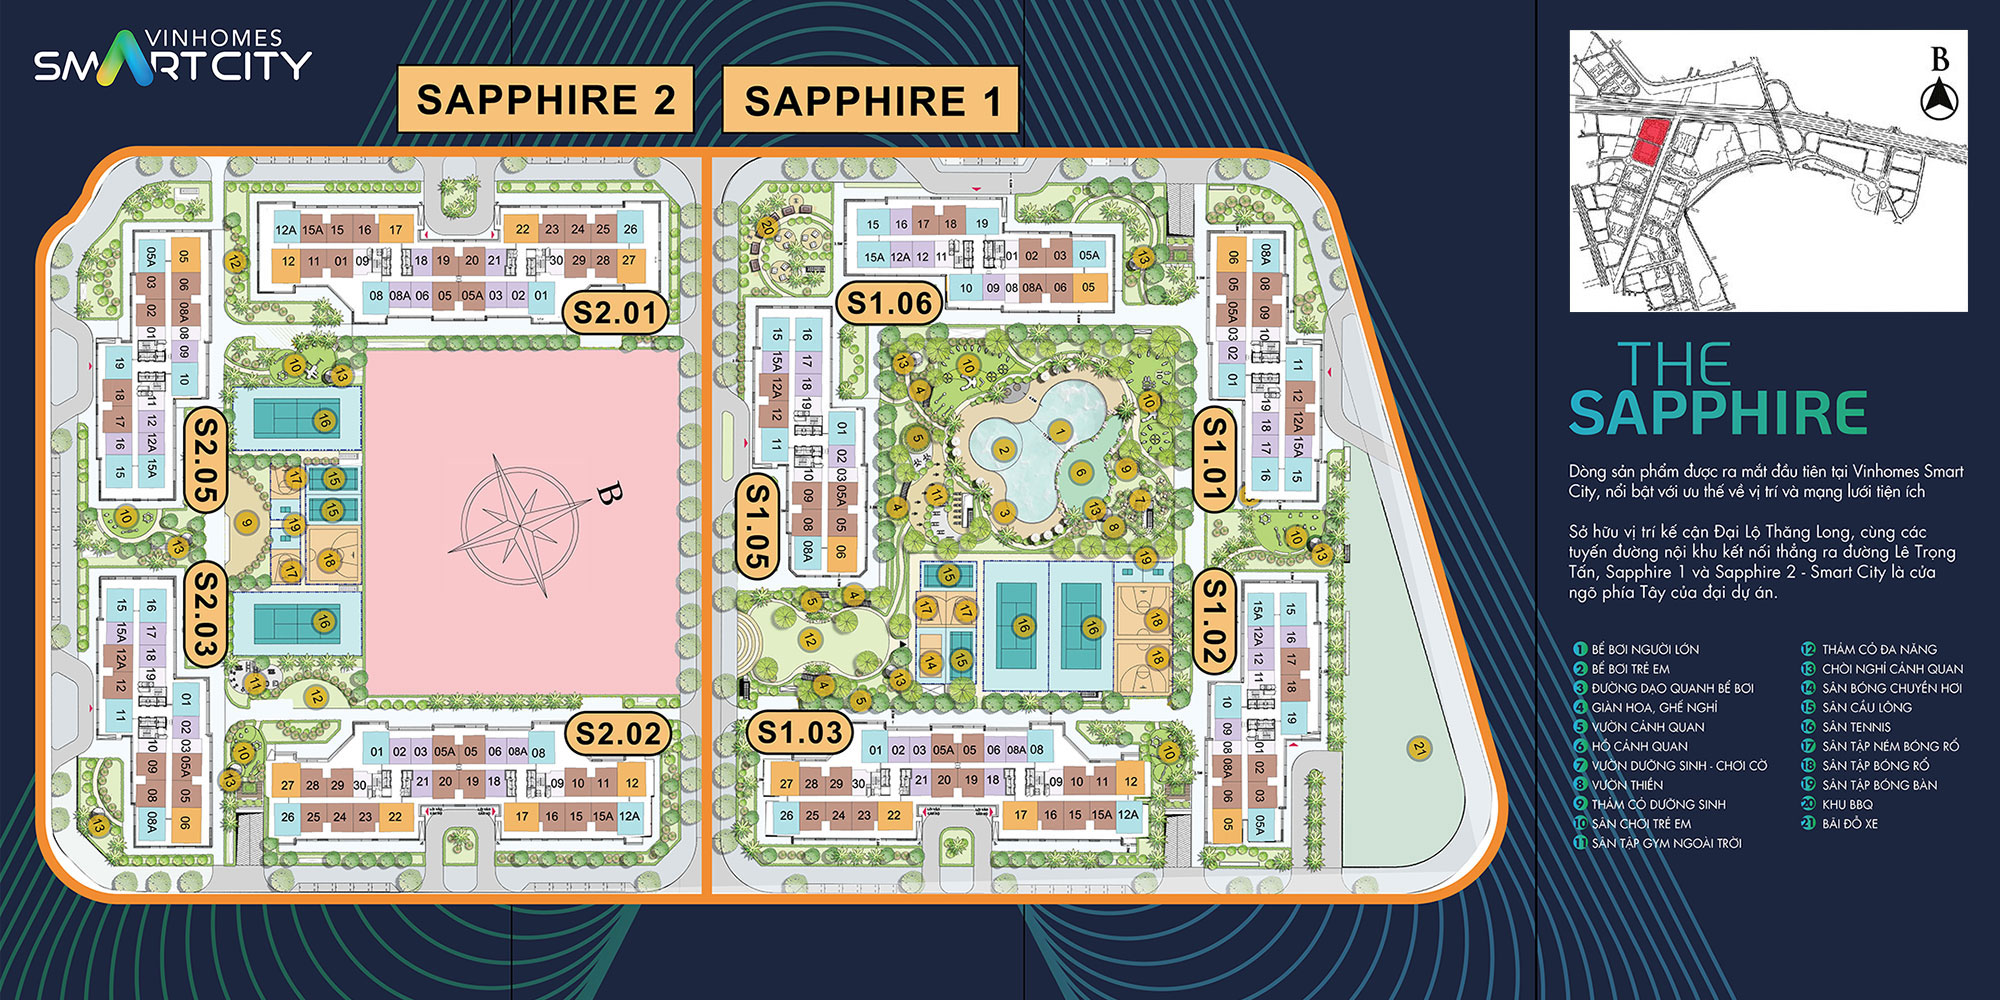 the-sapphire-1-the-sapphire-2-vinhomes-smart-city